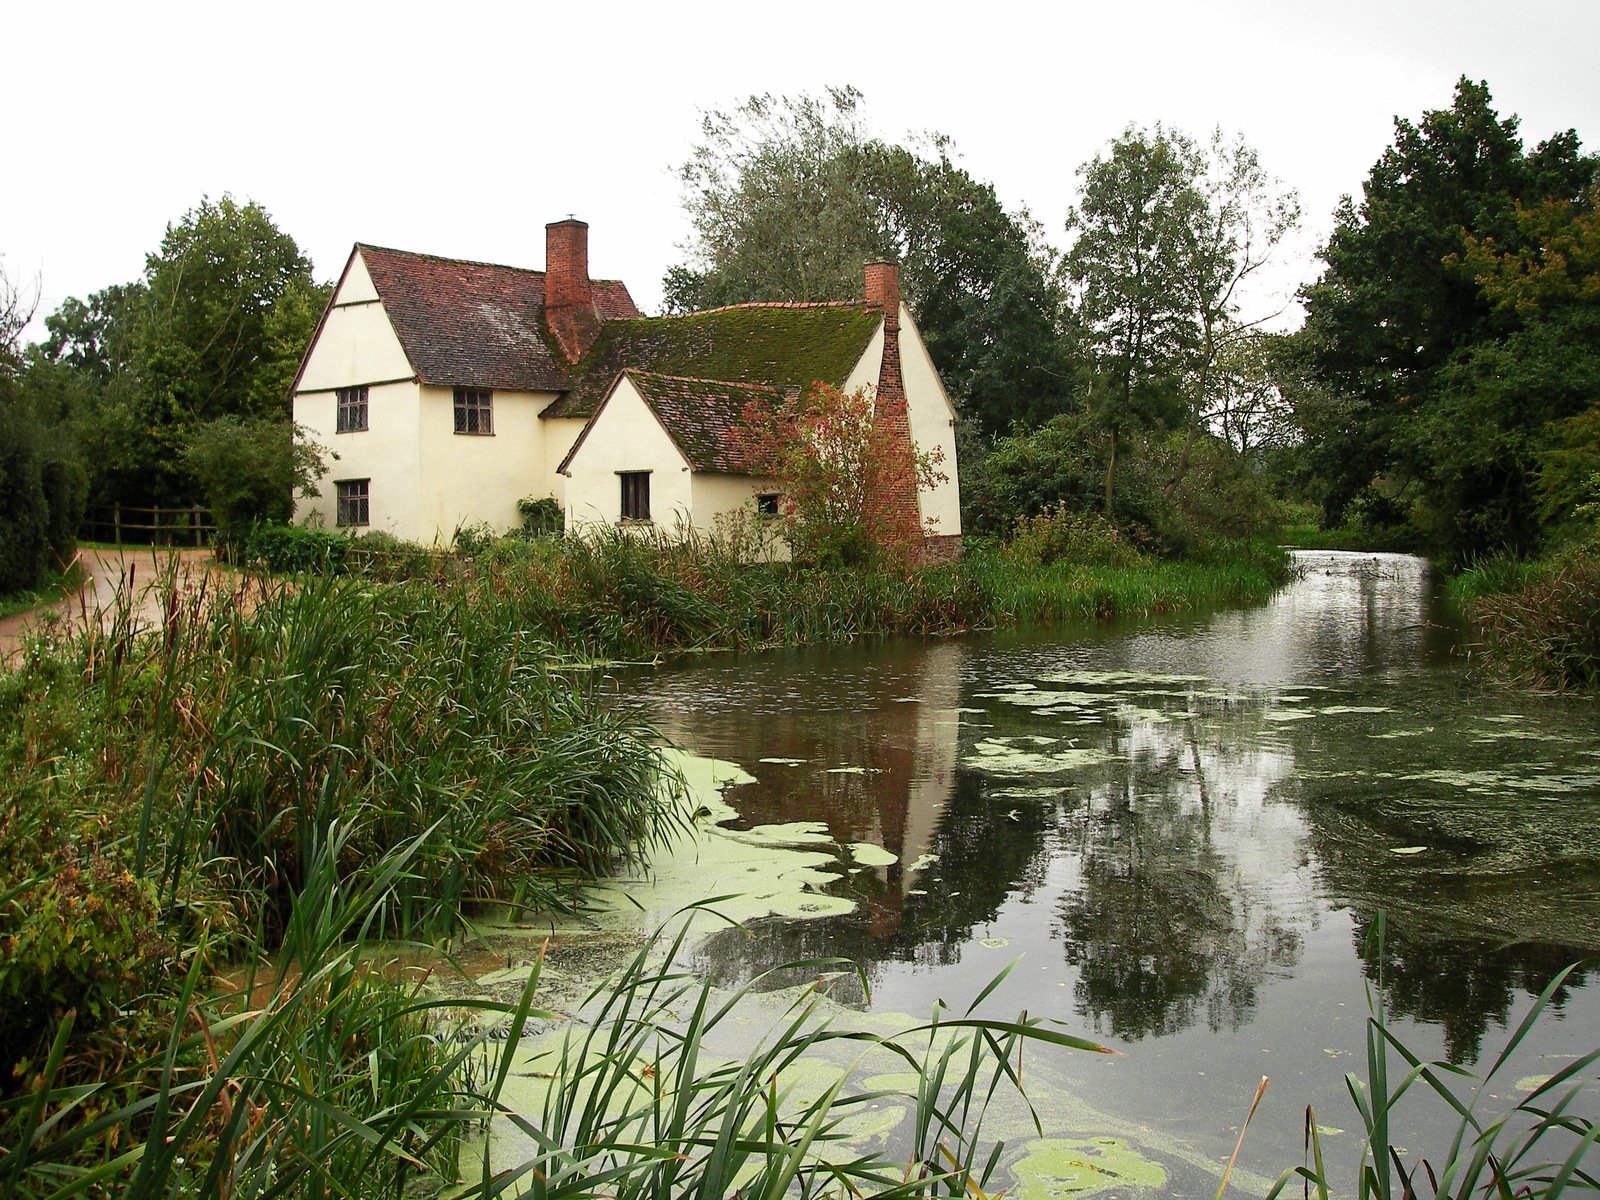 a river runs beside a house near the water